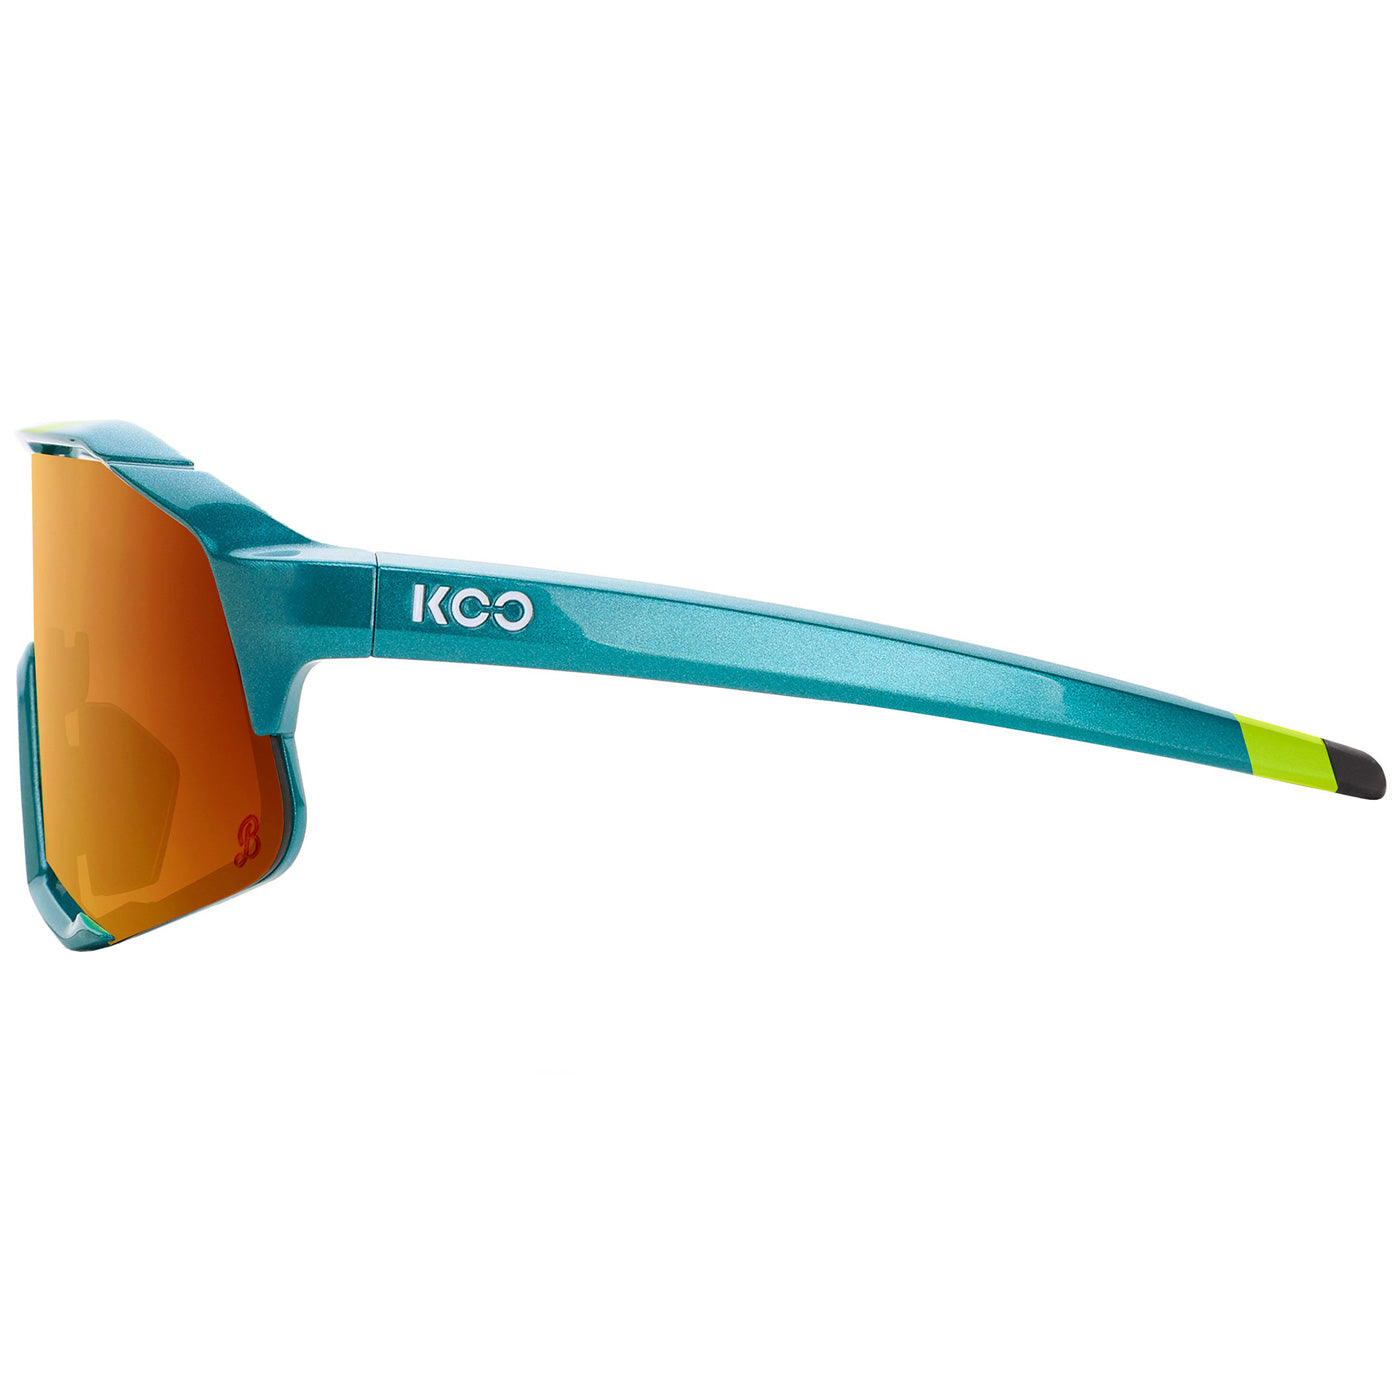 KOO Demos sunglasses - Bora Hansgrohe